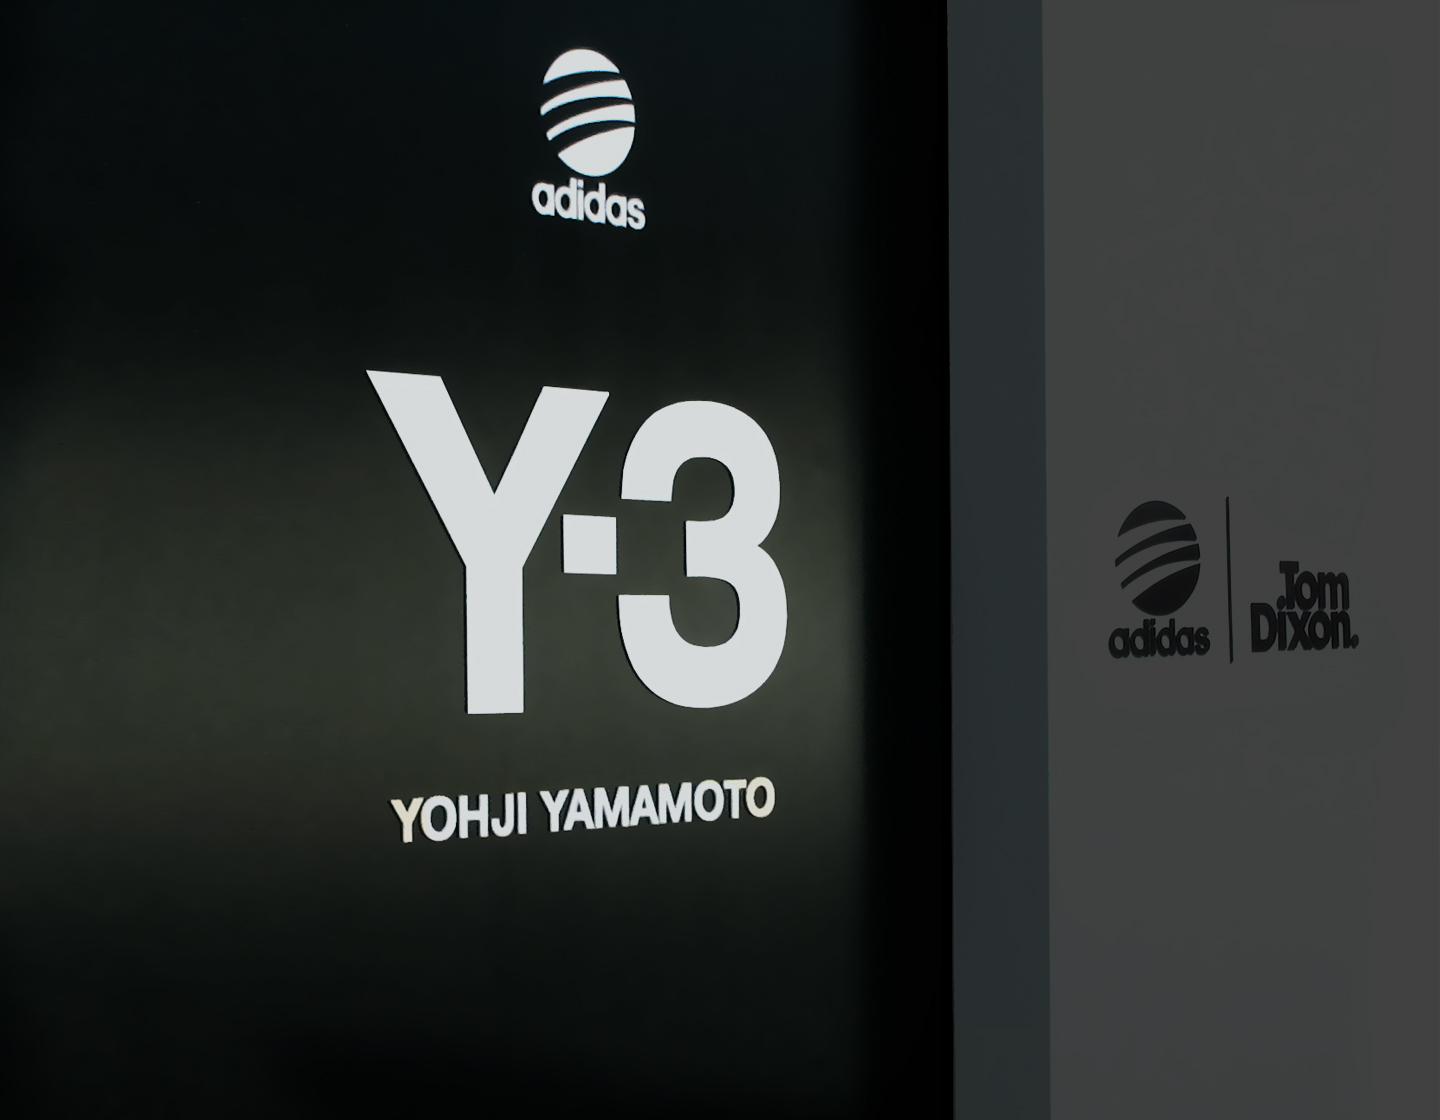 adidas messestand event yamamoto